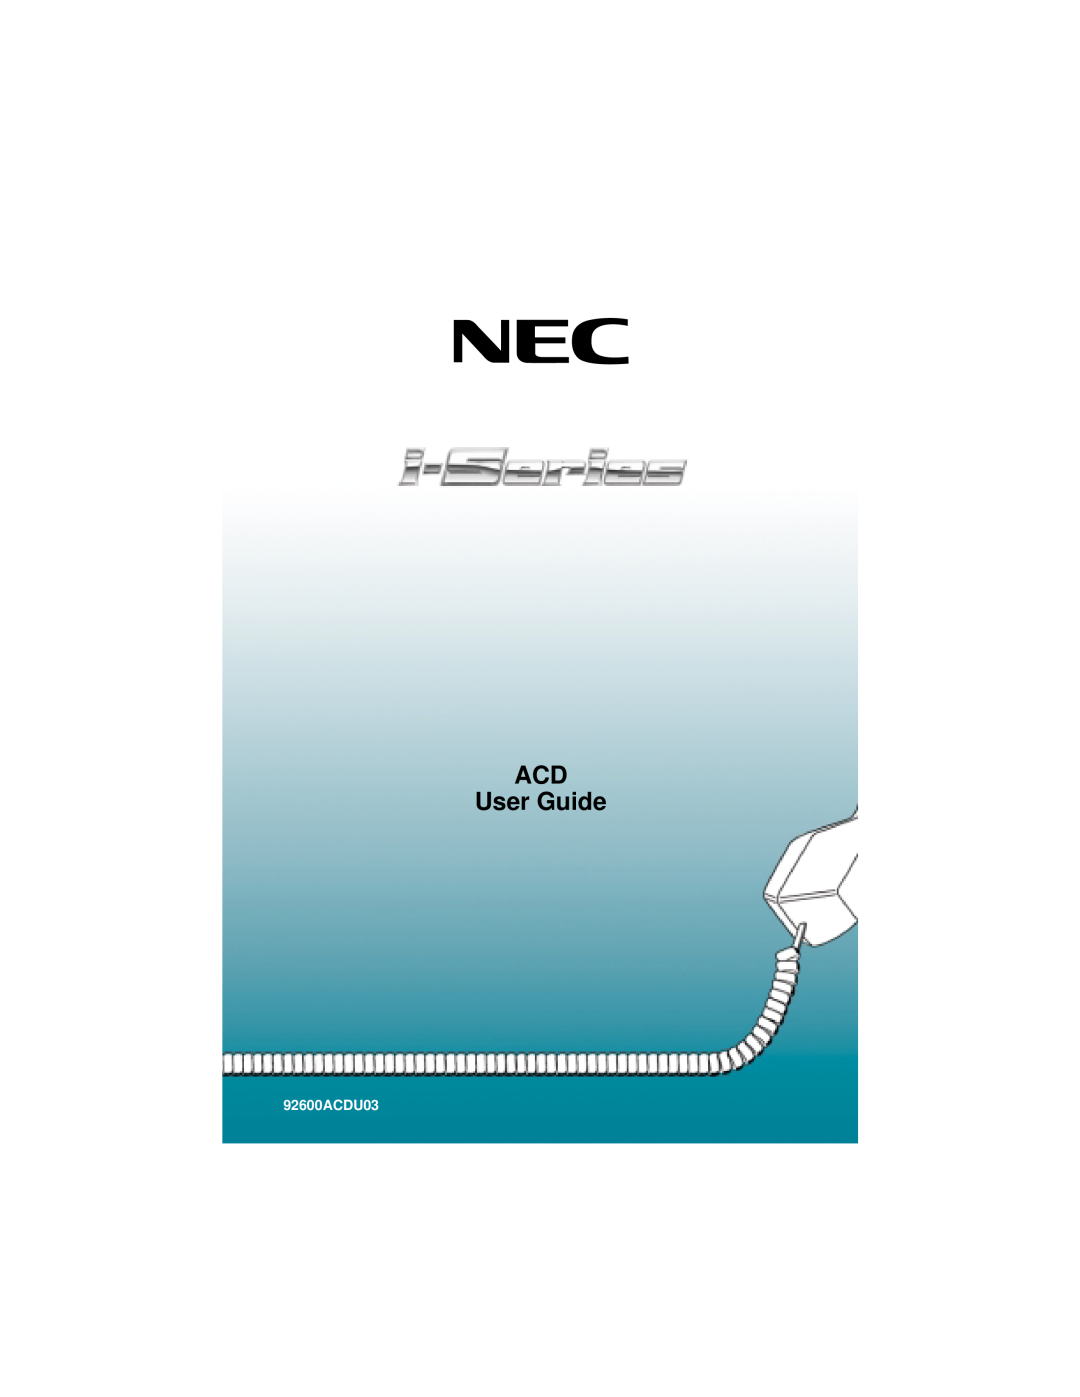 NEC i-Series manual ACD User Guide, 92600ACDU03 